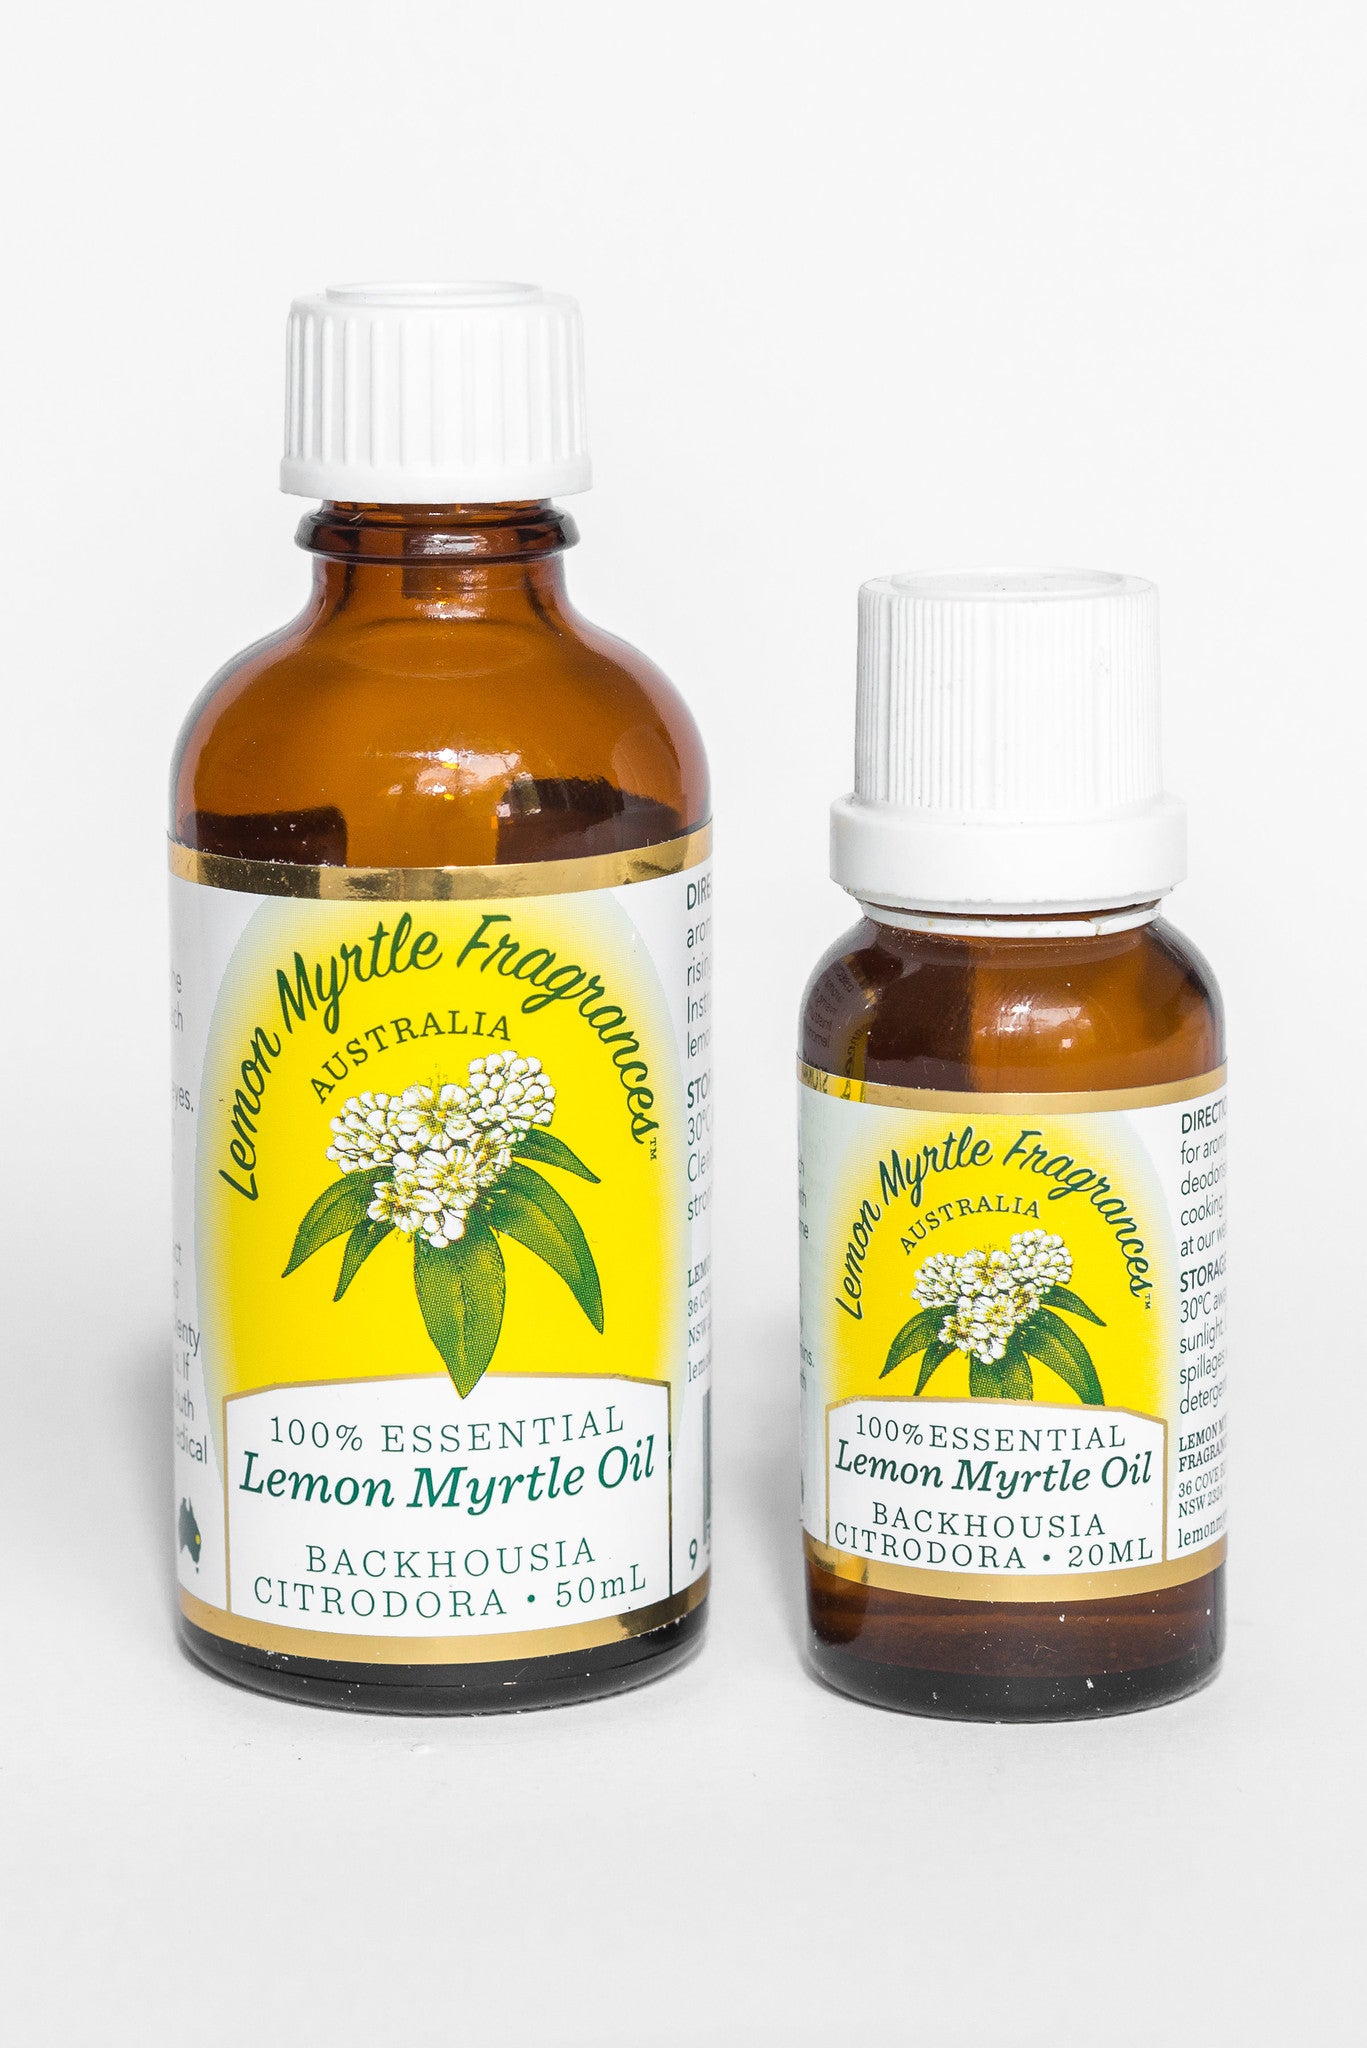 Uses for Lemon Myrtle Essential Oil